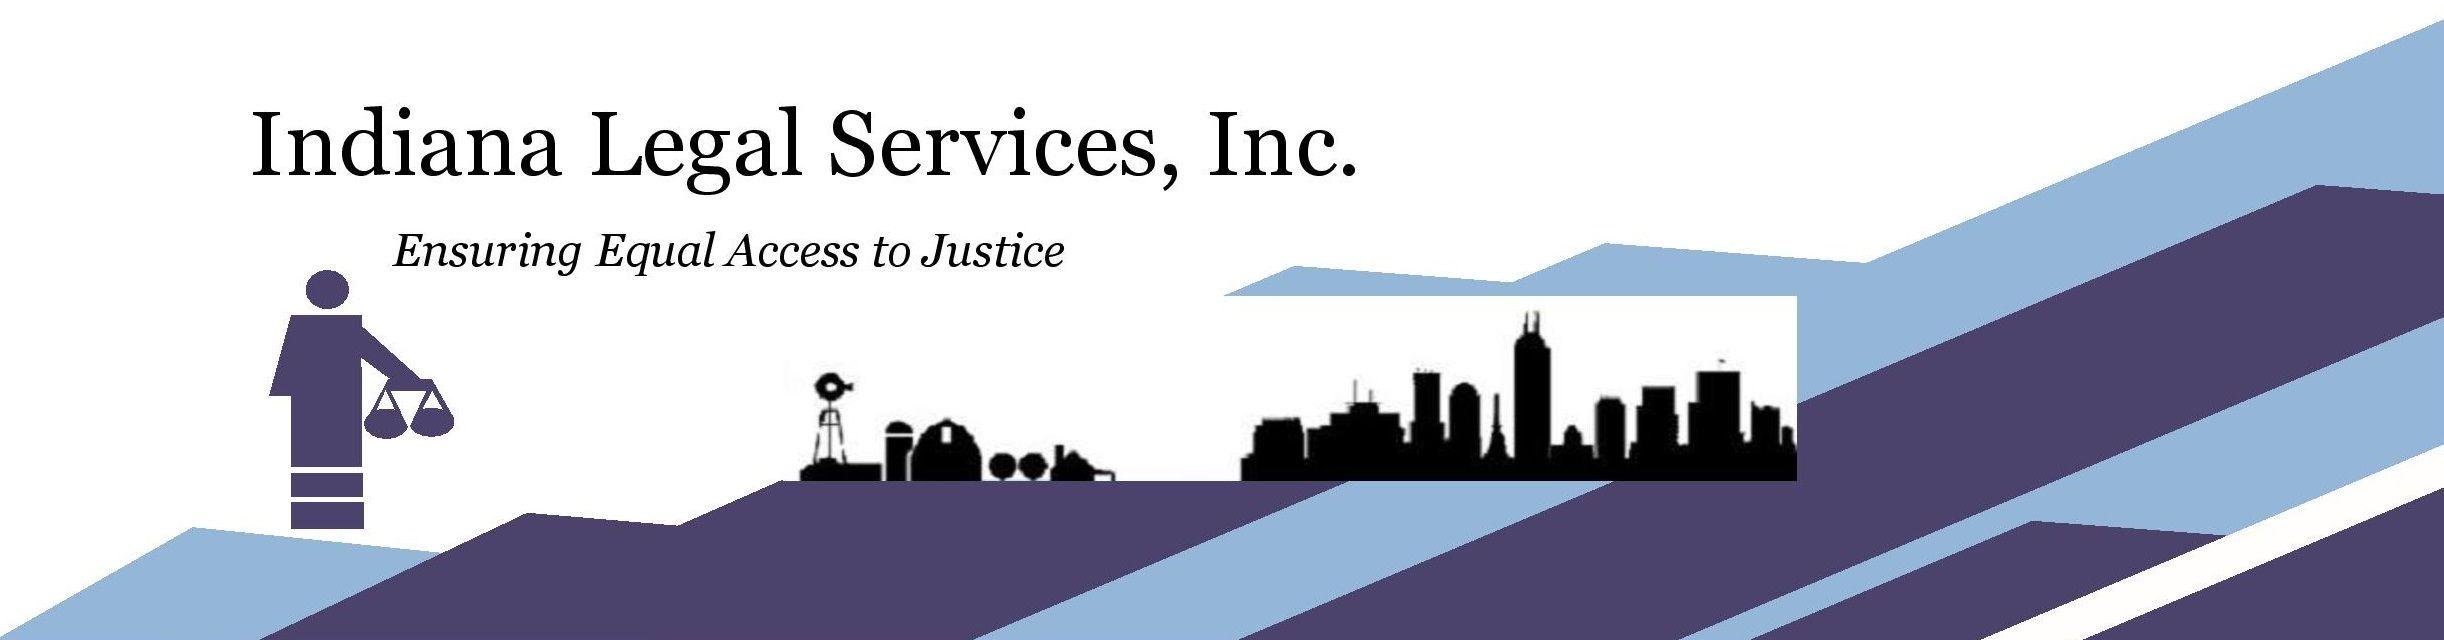 Legal Service Logo - Indiana Legal Services, Inc